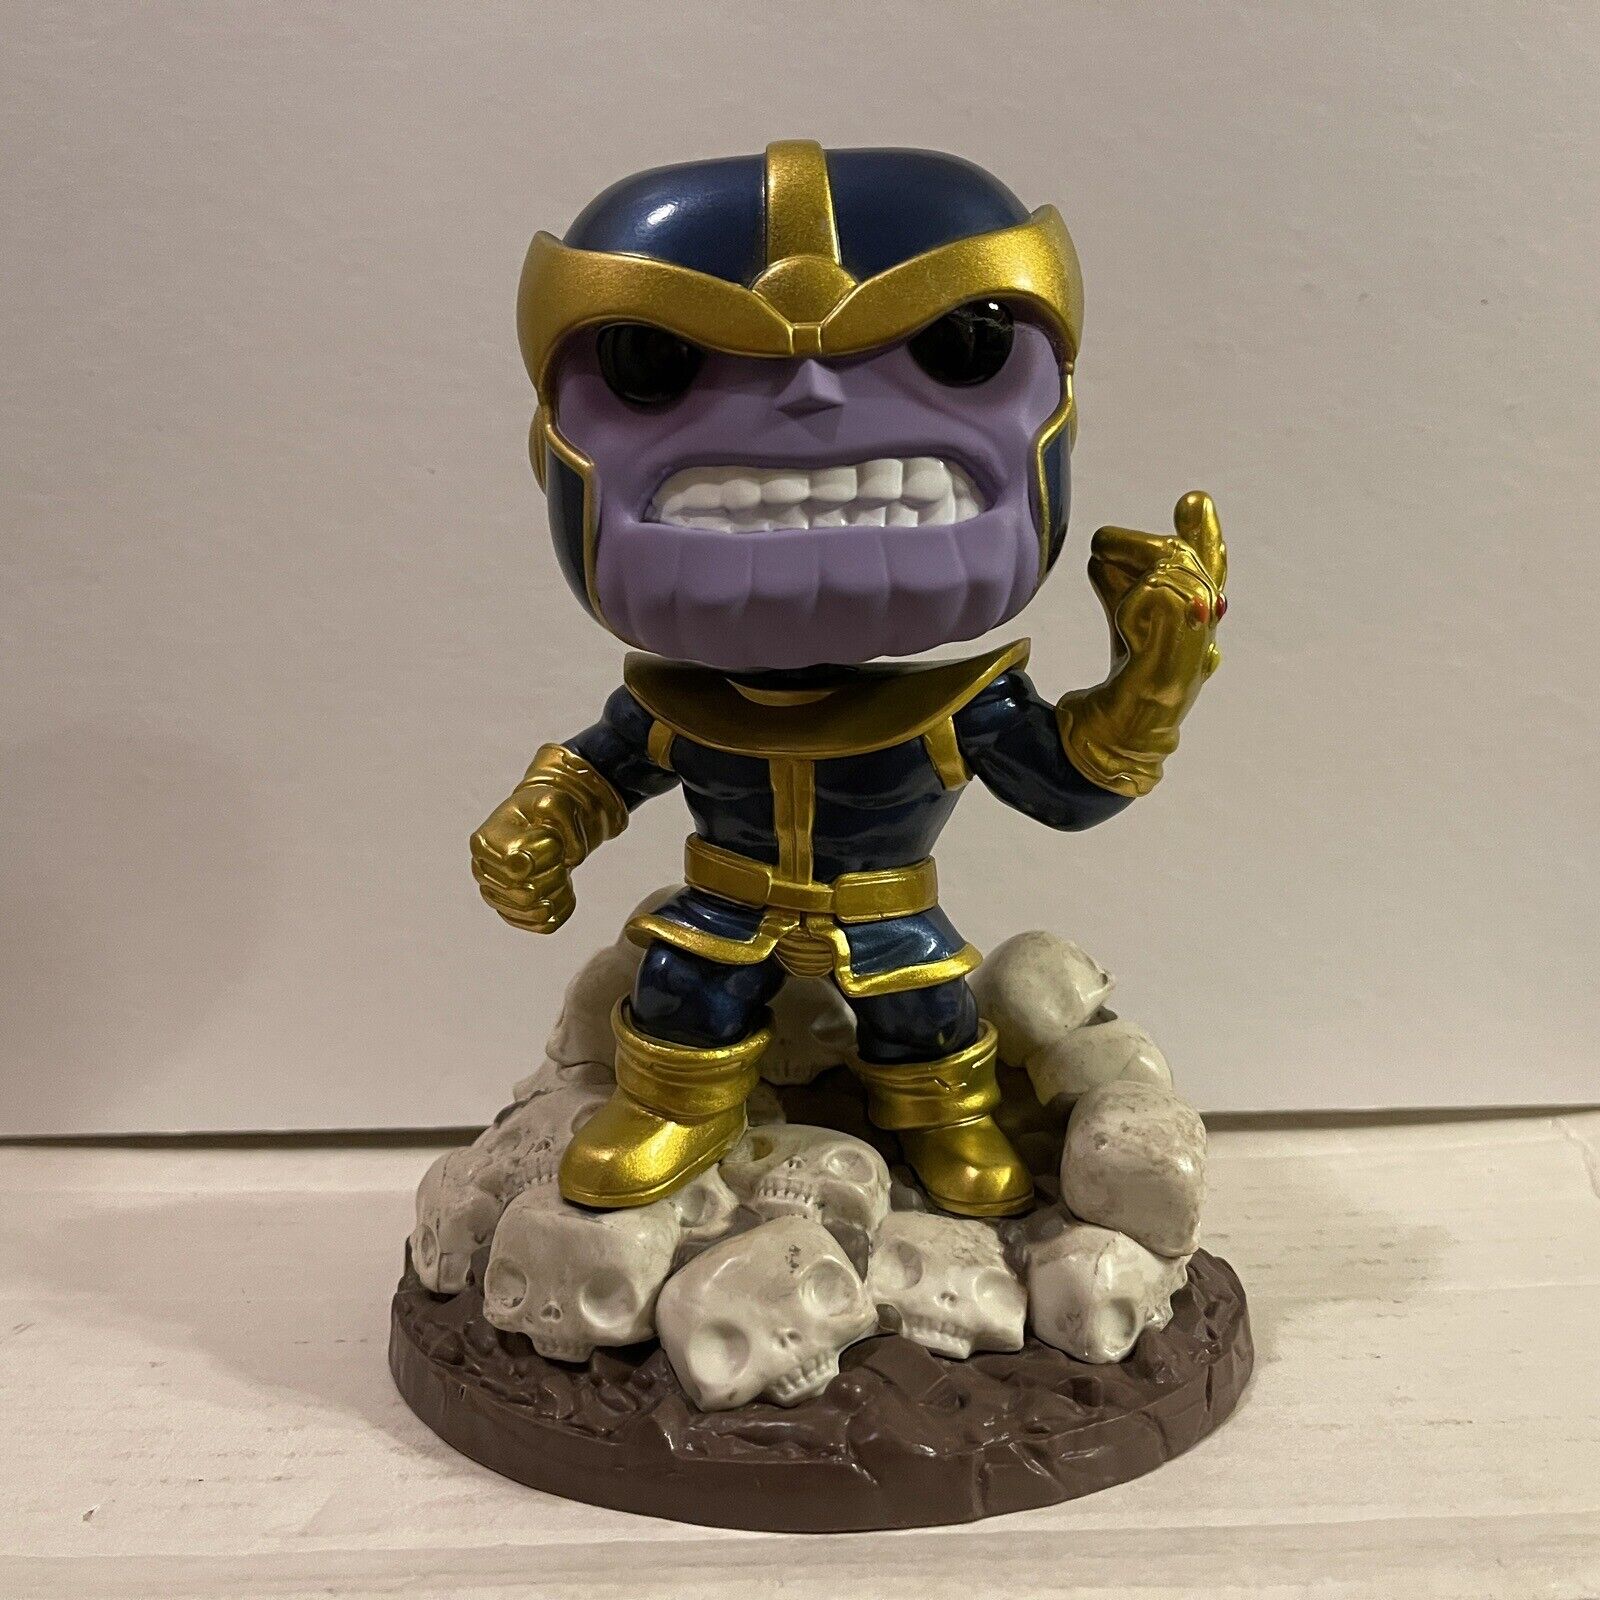 Thanos “Gauntlet snap” Deluxe  #556 PX Exclusive Funko POP No box - Marvel